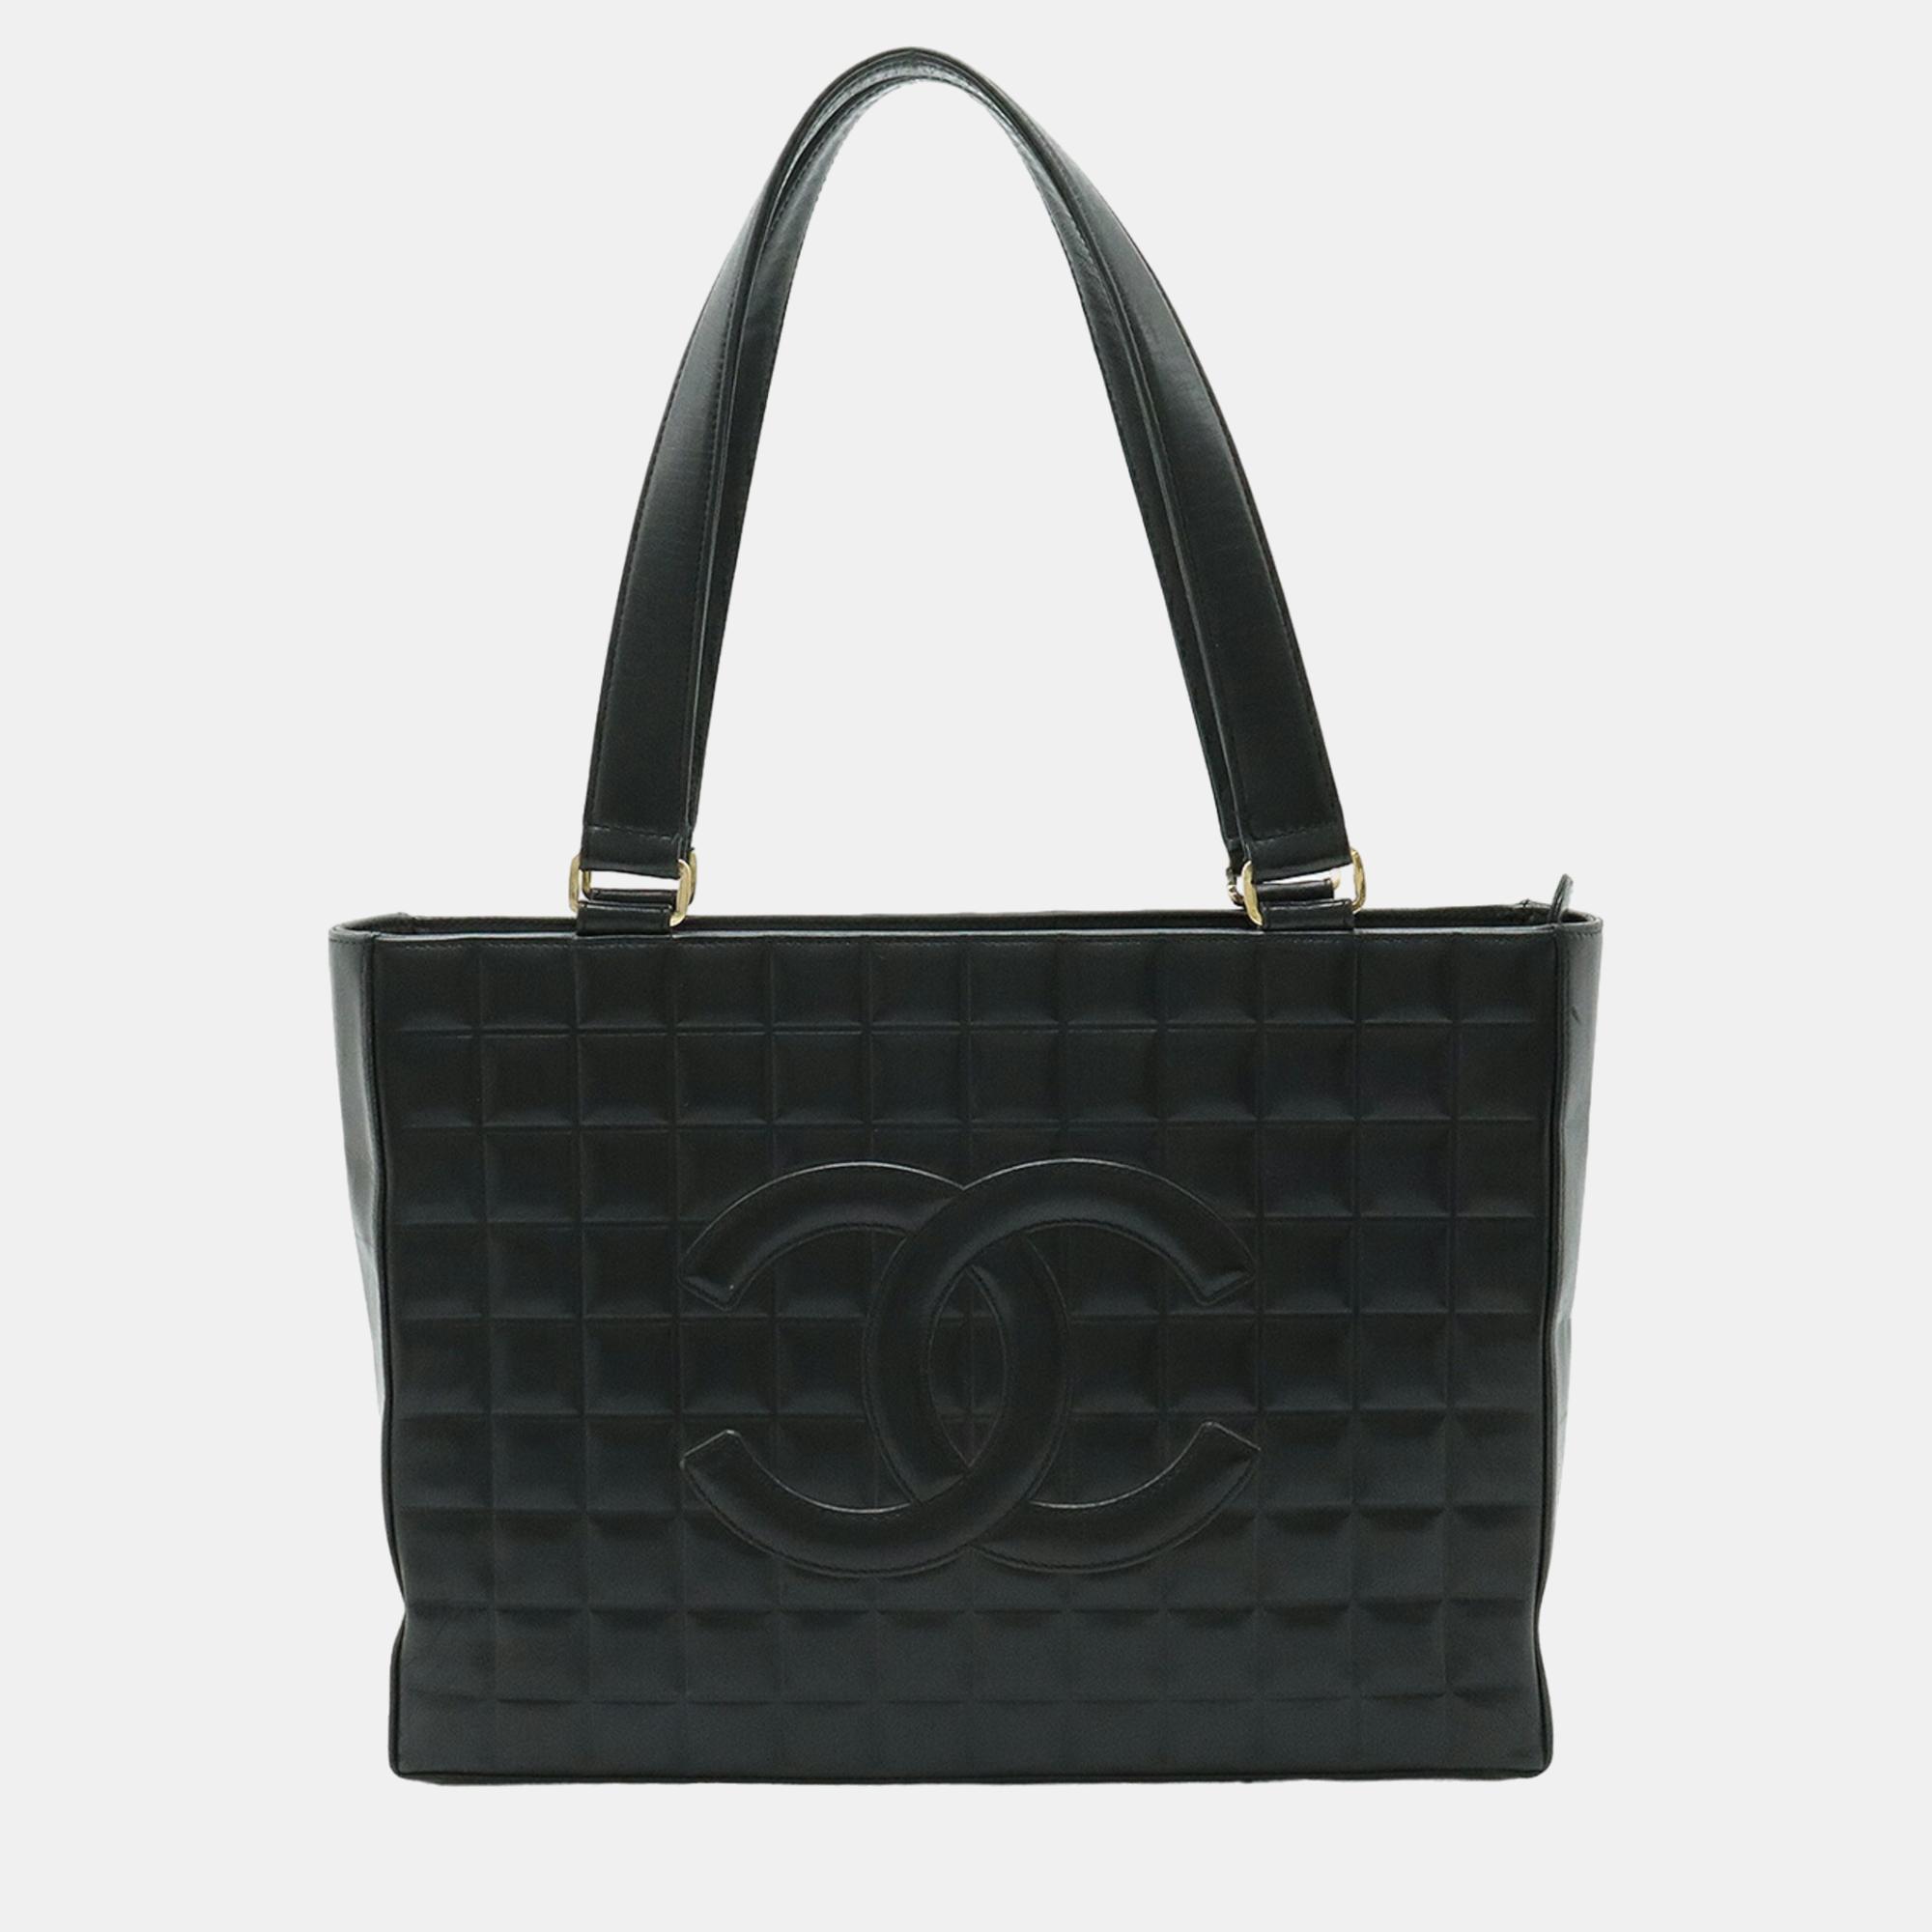 

Chanel Black Leather CC Chocolate Bar Tote Bag